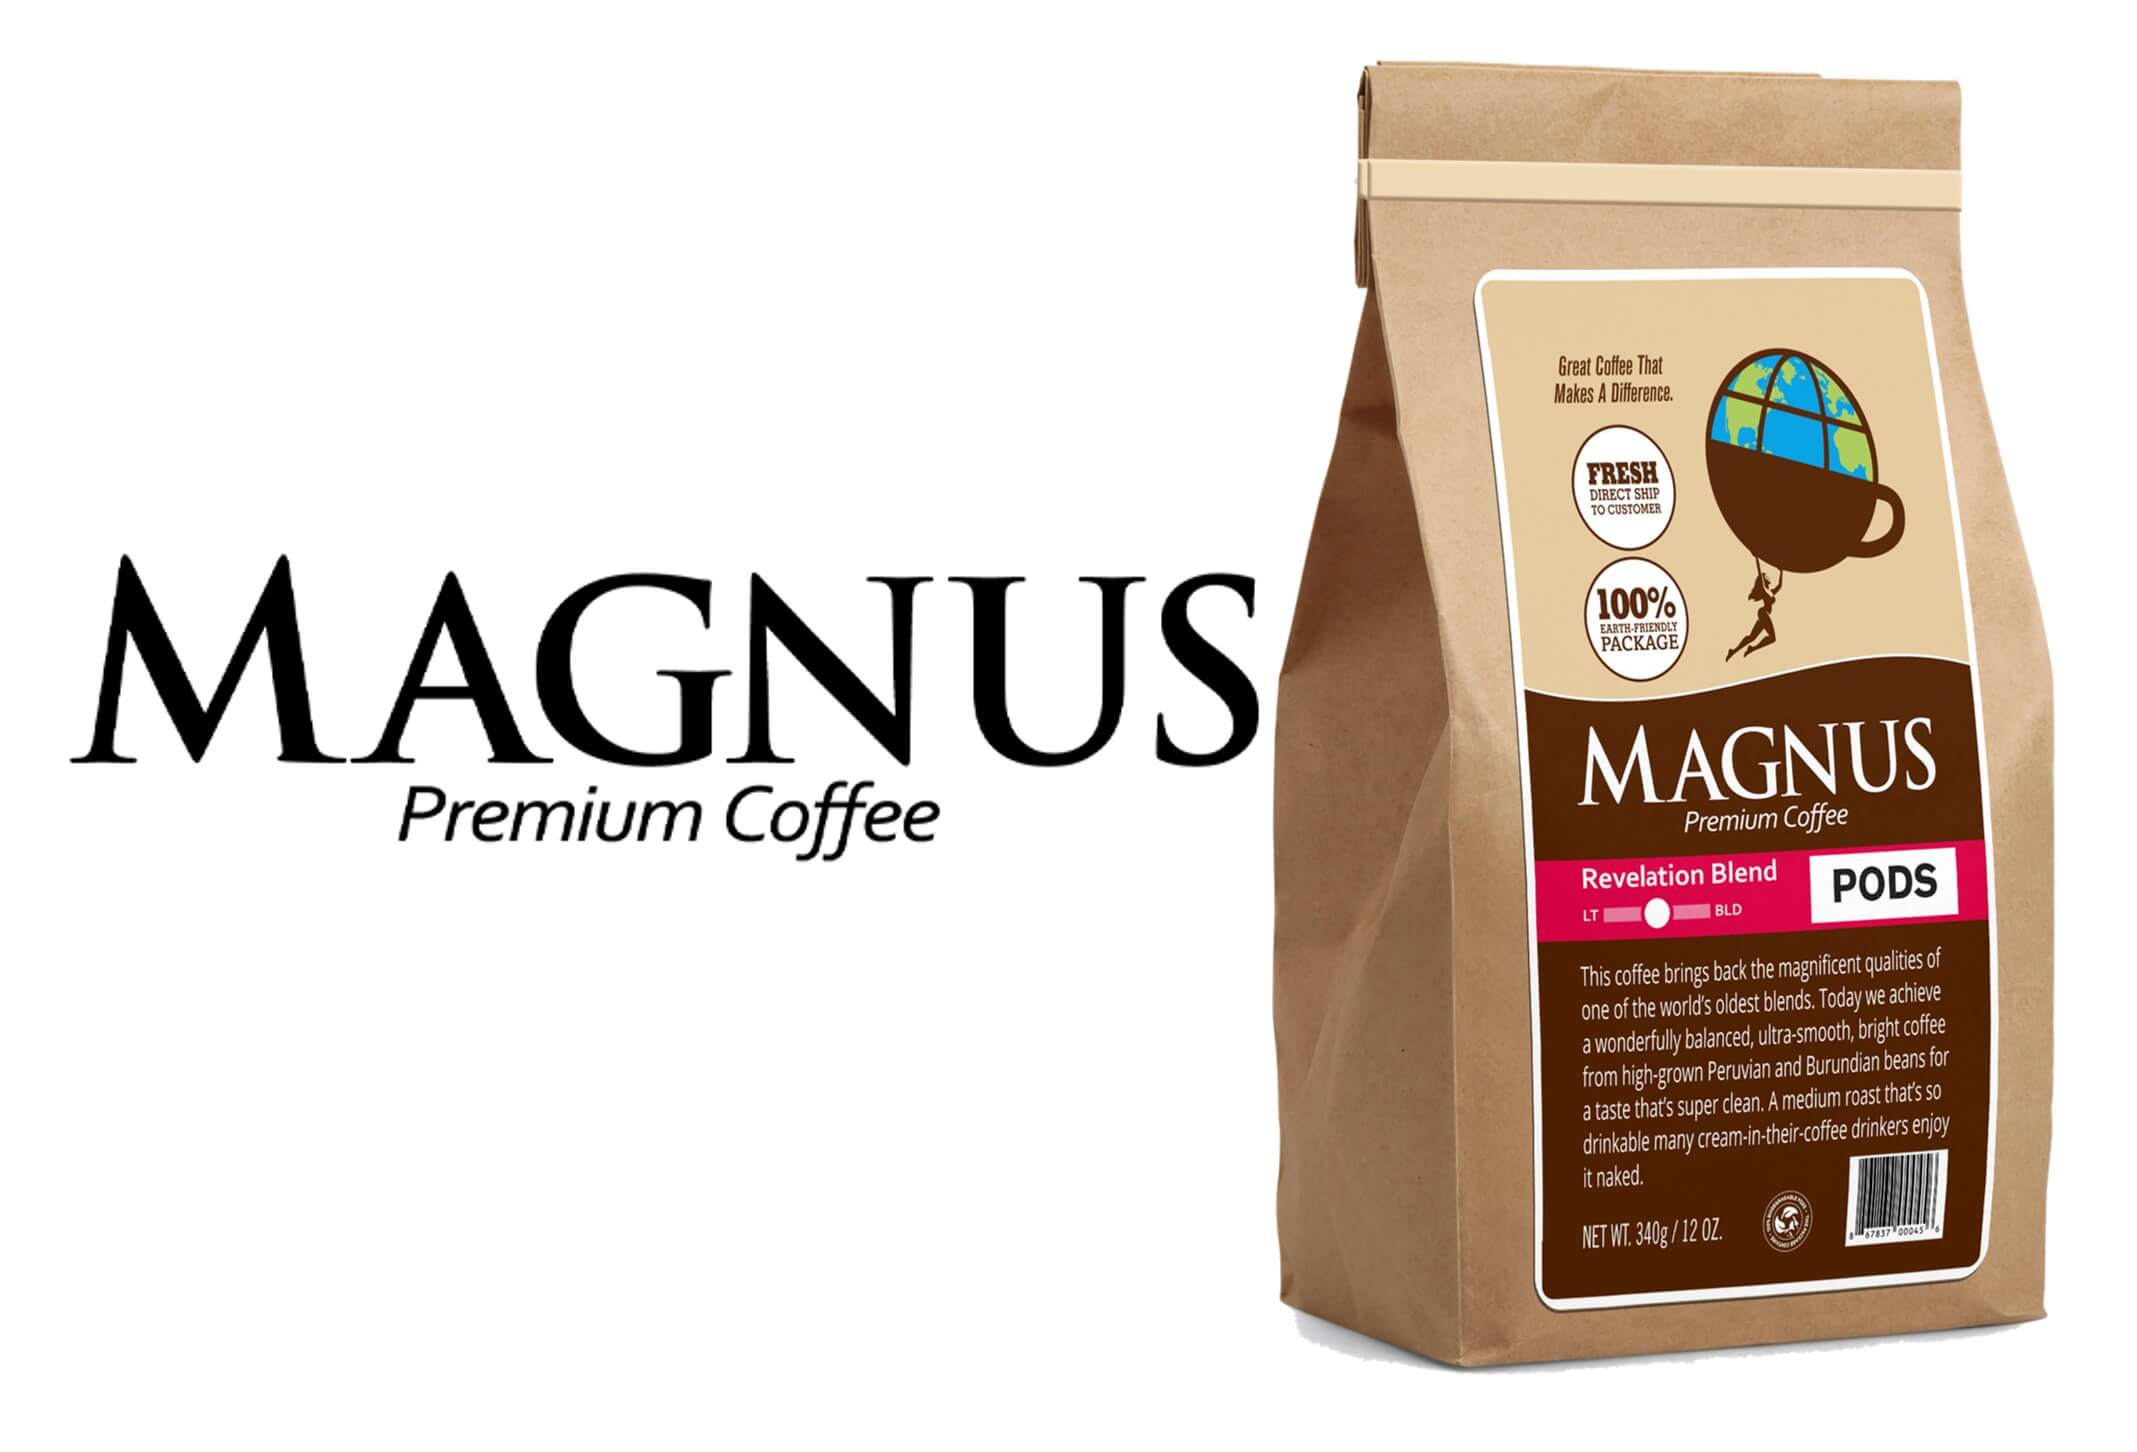 Magnus coffee my cafe coffee